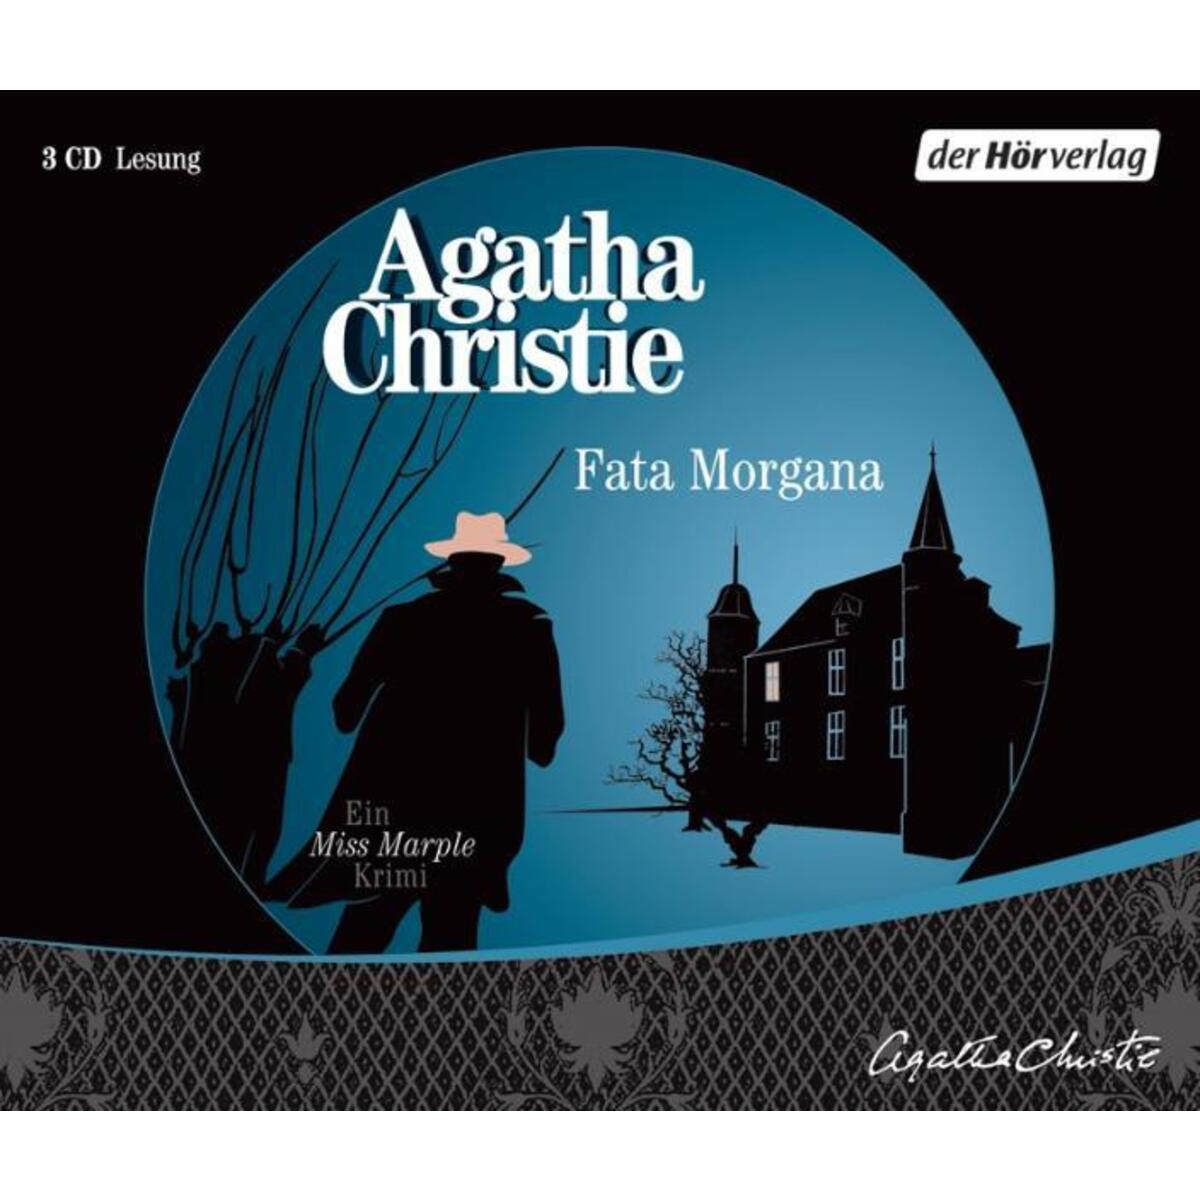 Fata Morgana. 3 CDs von Hoerverlag DHV Der